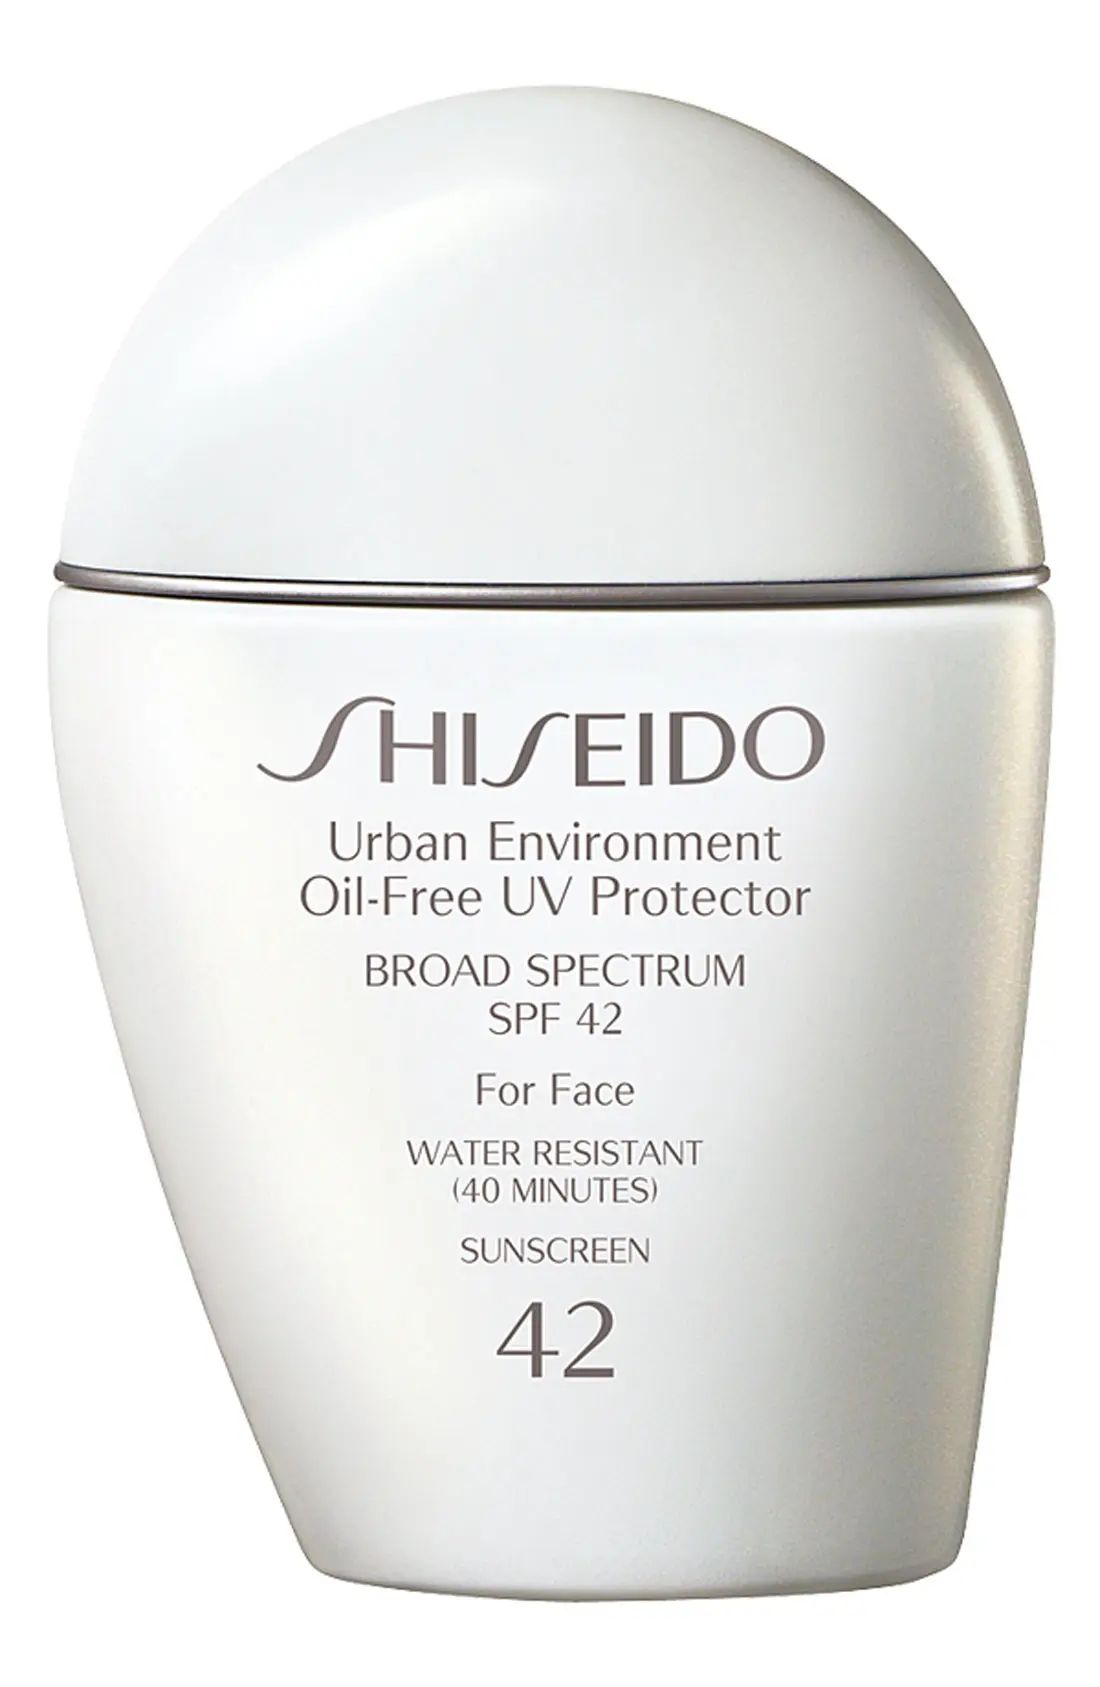 Shiseido Urban Environment Oil-Free Uv Protector Broad Spectrum Sunscreen Spf 42, Size 1 oz | Nordstrom